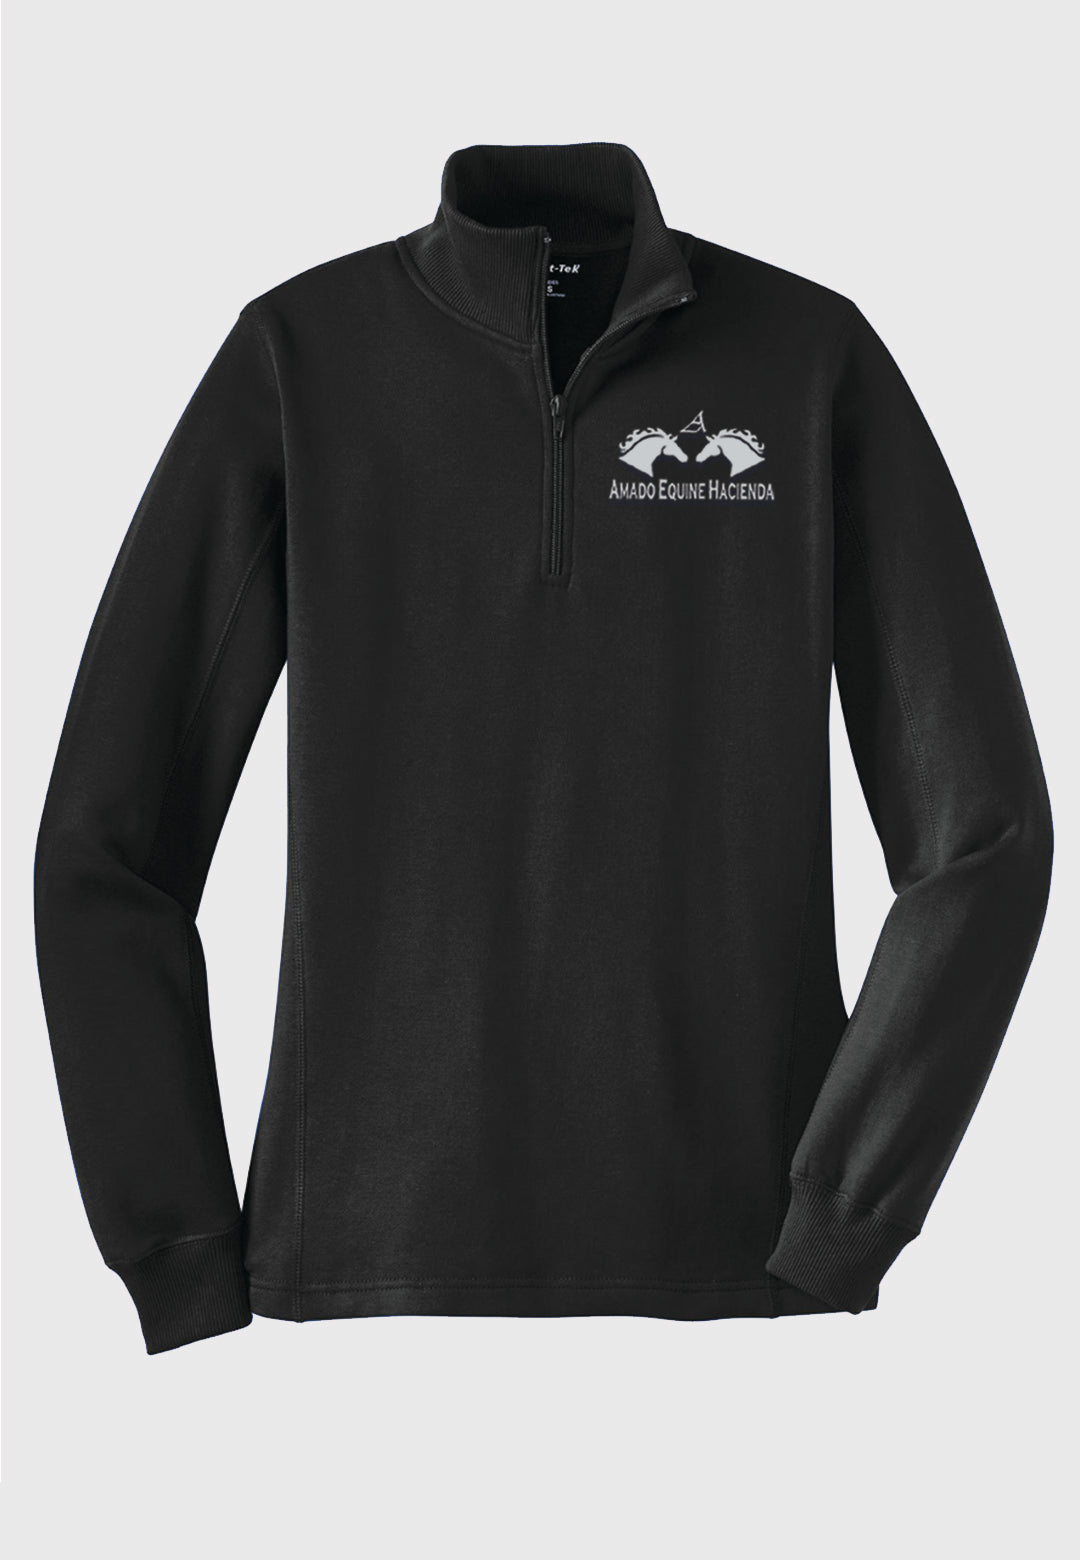 Amado Equine Hacienda Sport-Tek® 1/4-Zip Sweatshirt - Ladies/Mens Sizes, 2 Color Options